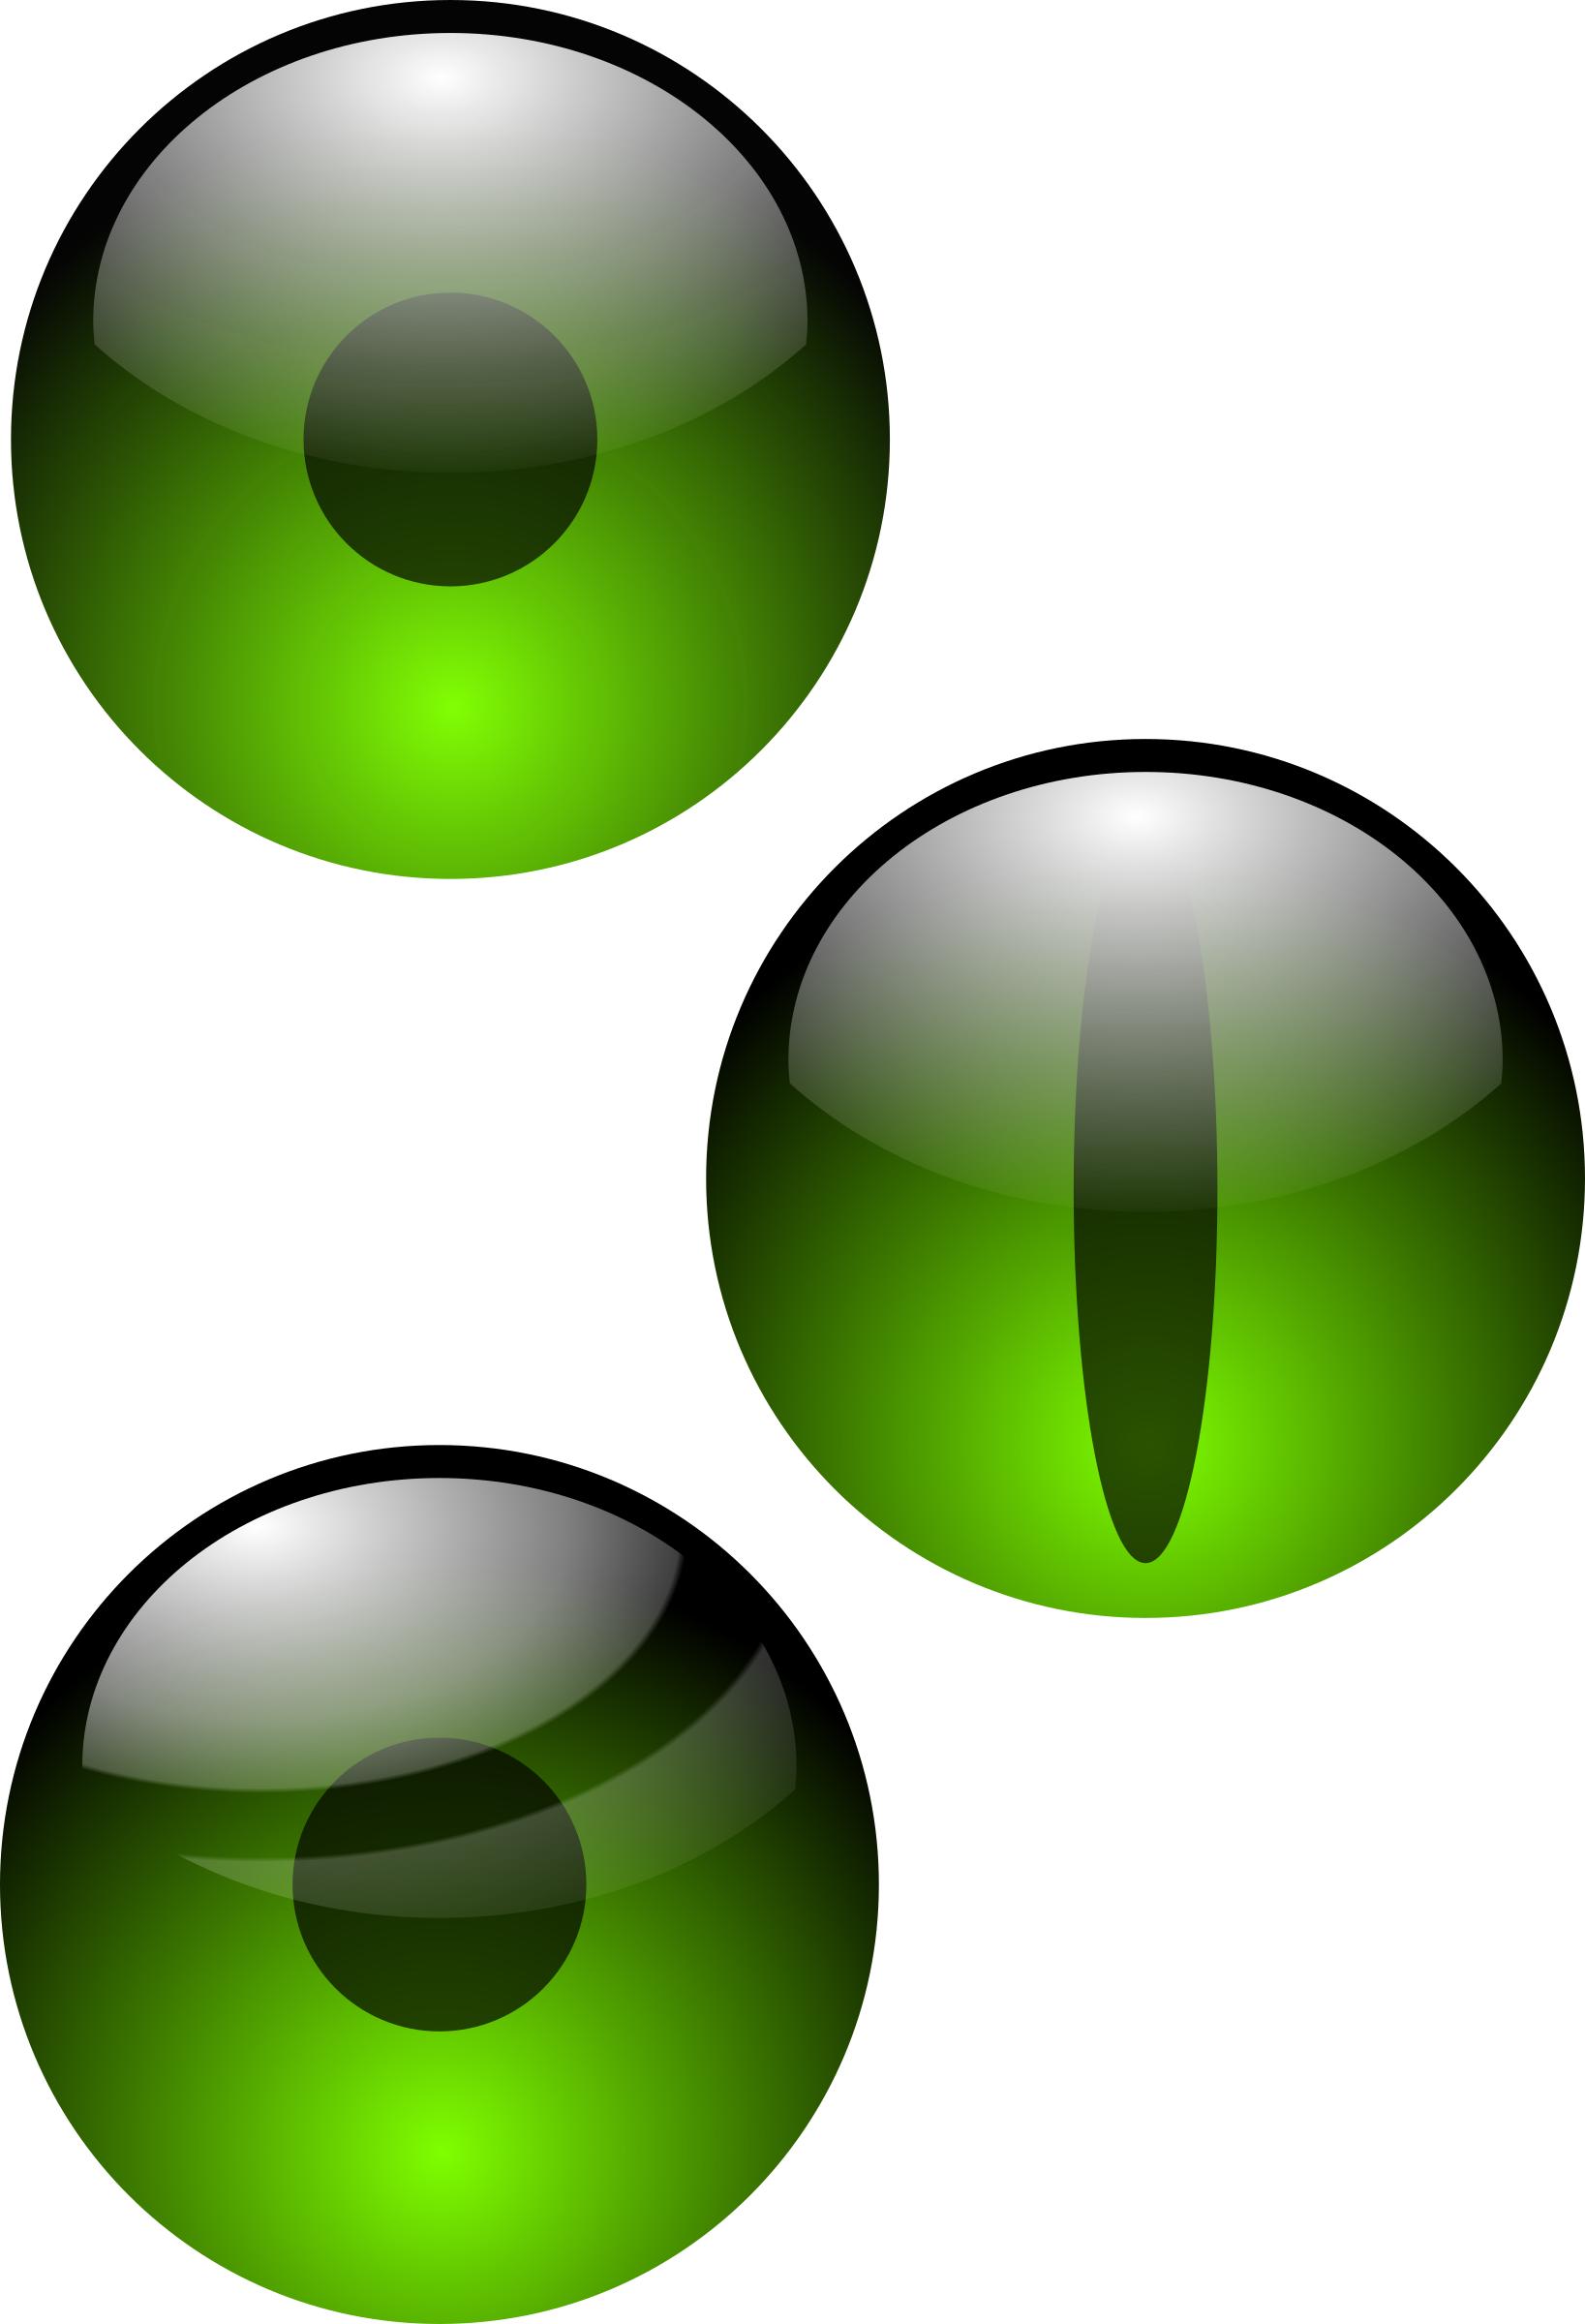 three eyes (7fff00) PNG icons